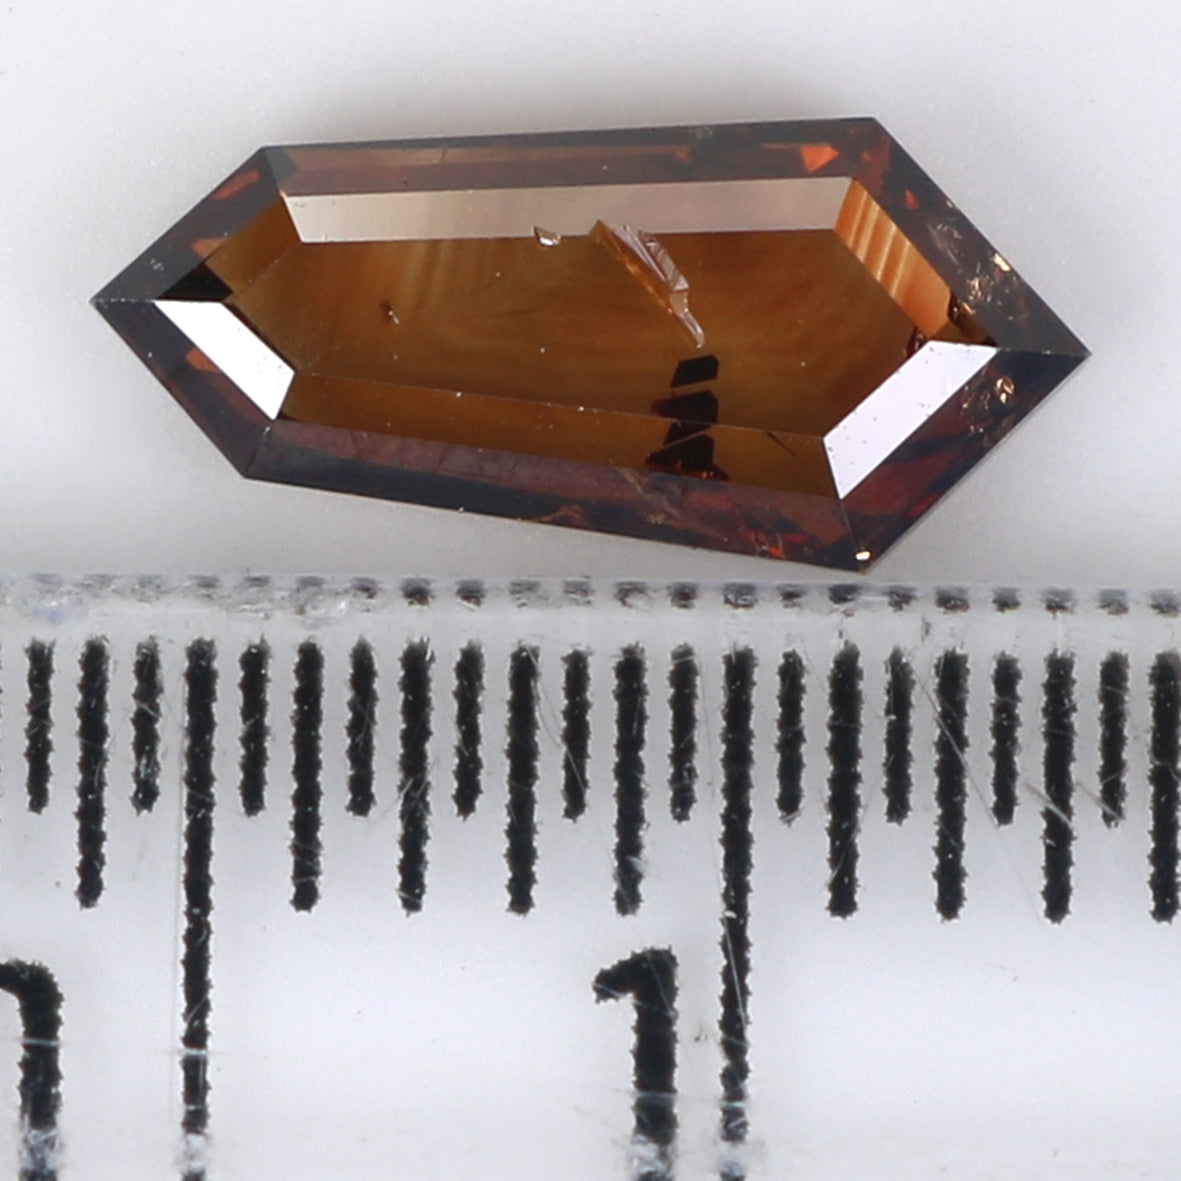 0.68 CT Natural Loose Shield Shape Diamond Brown Color Shield Shape Diamond 9.35 MM Natural Loose Diamond Shield Rose Cut Diamond QL1757